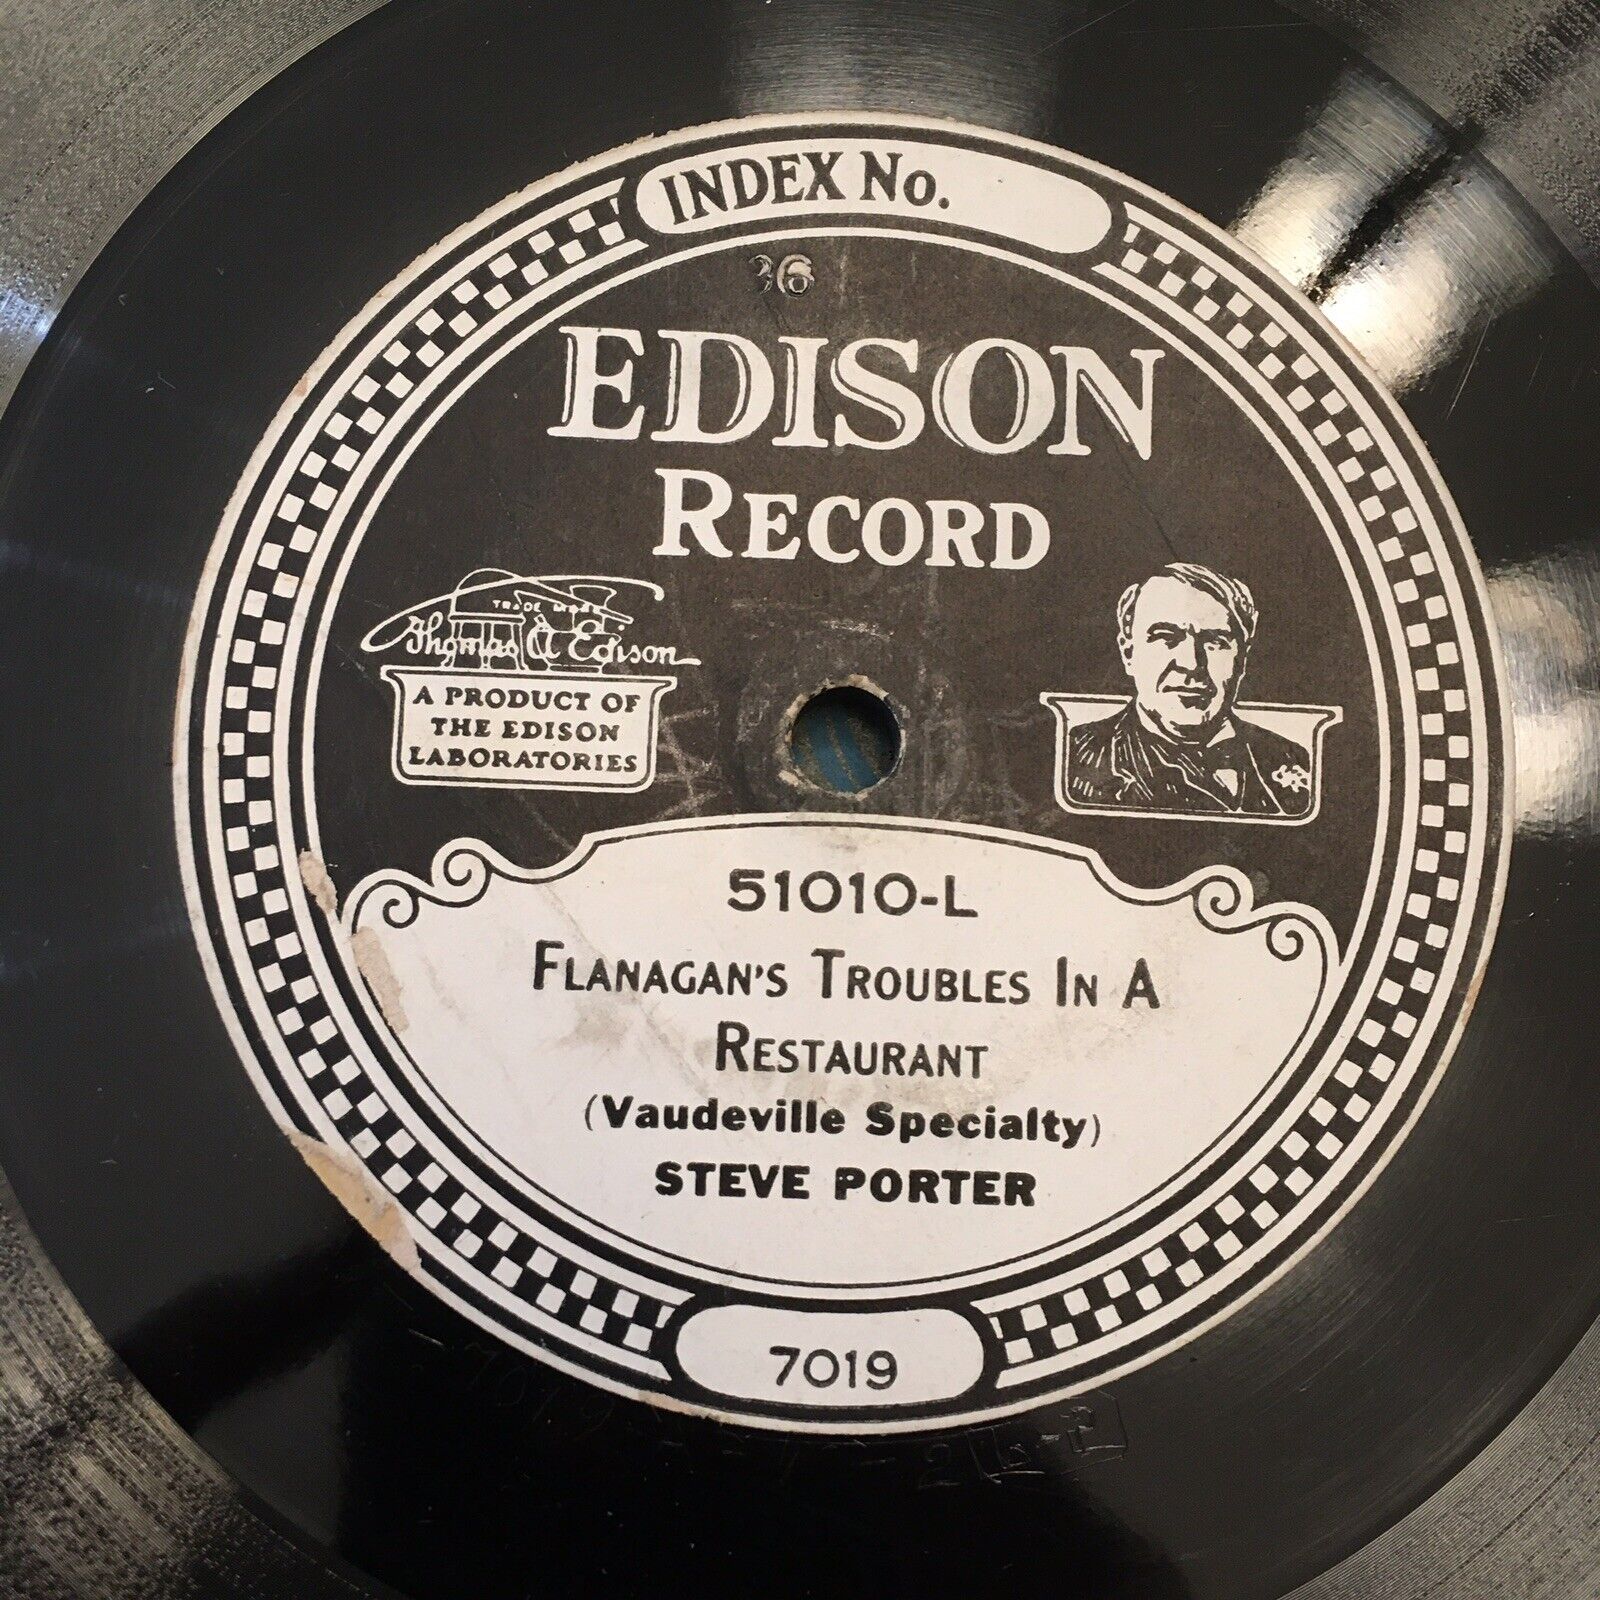 Edison Record 51010 The Arkansas Traveler, Flanagan's Troubles In A Restaurant 